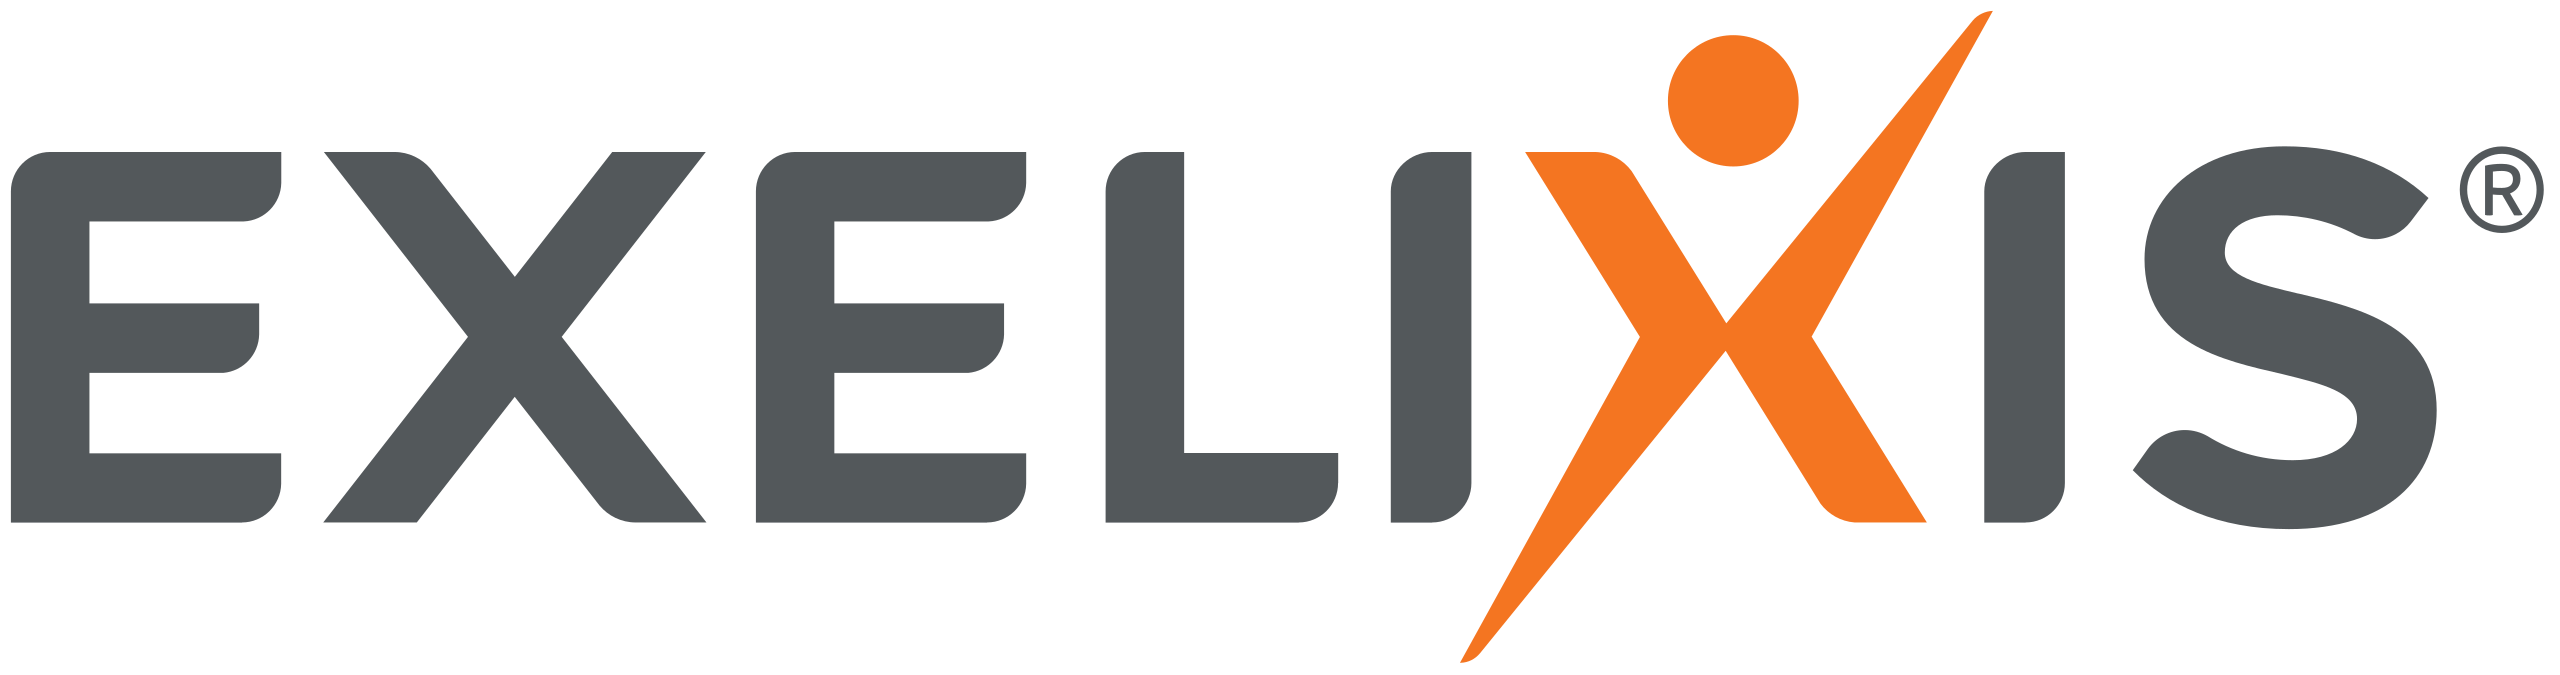 Exelixis_logo.svg